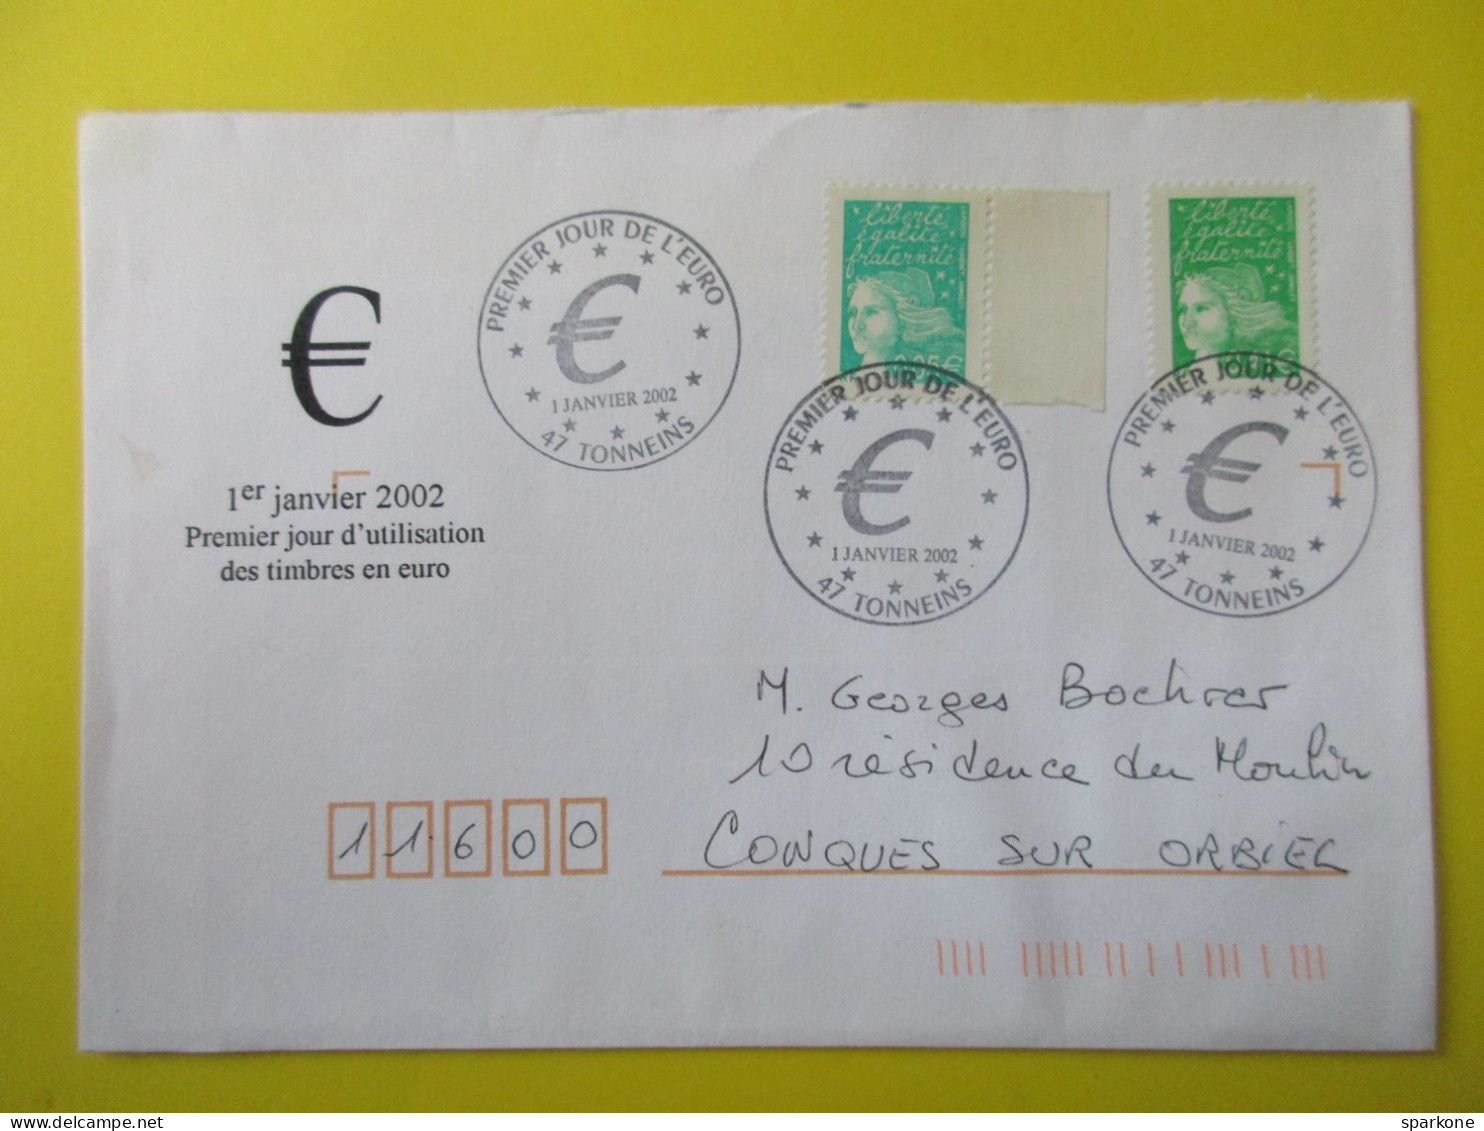 Marcophilie - Enveloppe - France - Cachet Commémoratif - Timbres Poste En €uros - 01 Janvier 2002 - Commemorative Postmarks